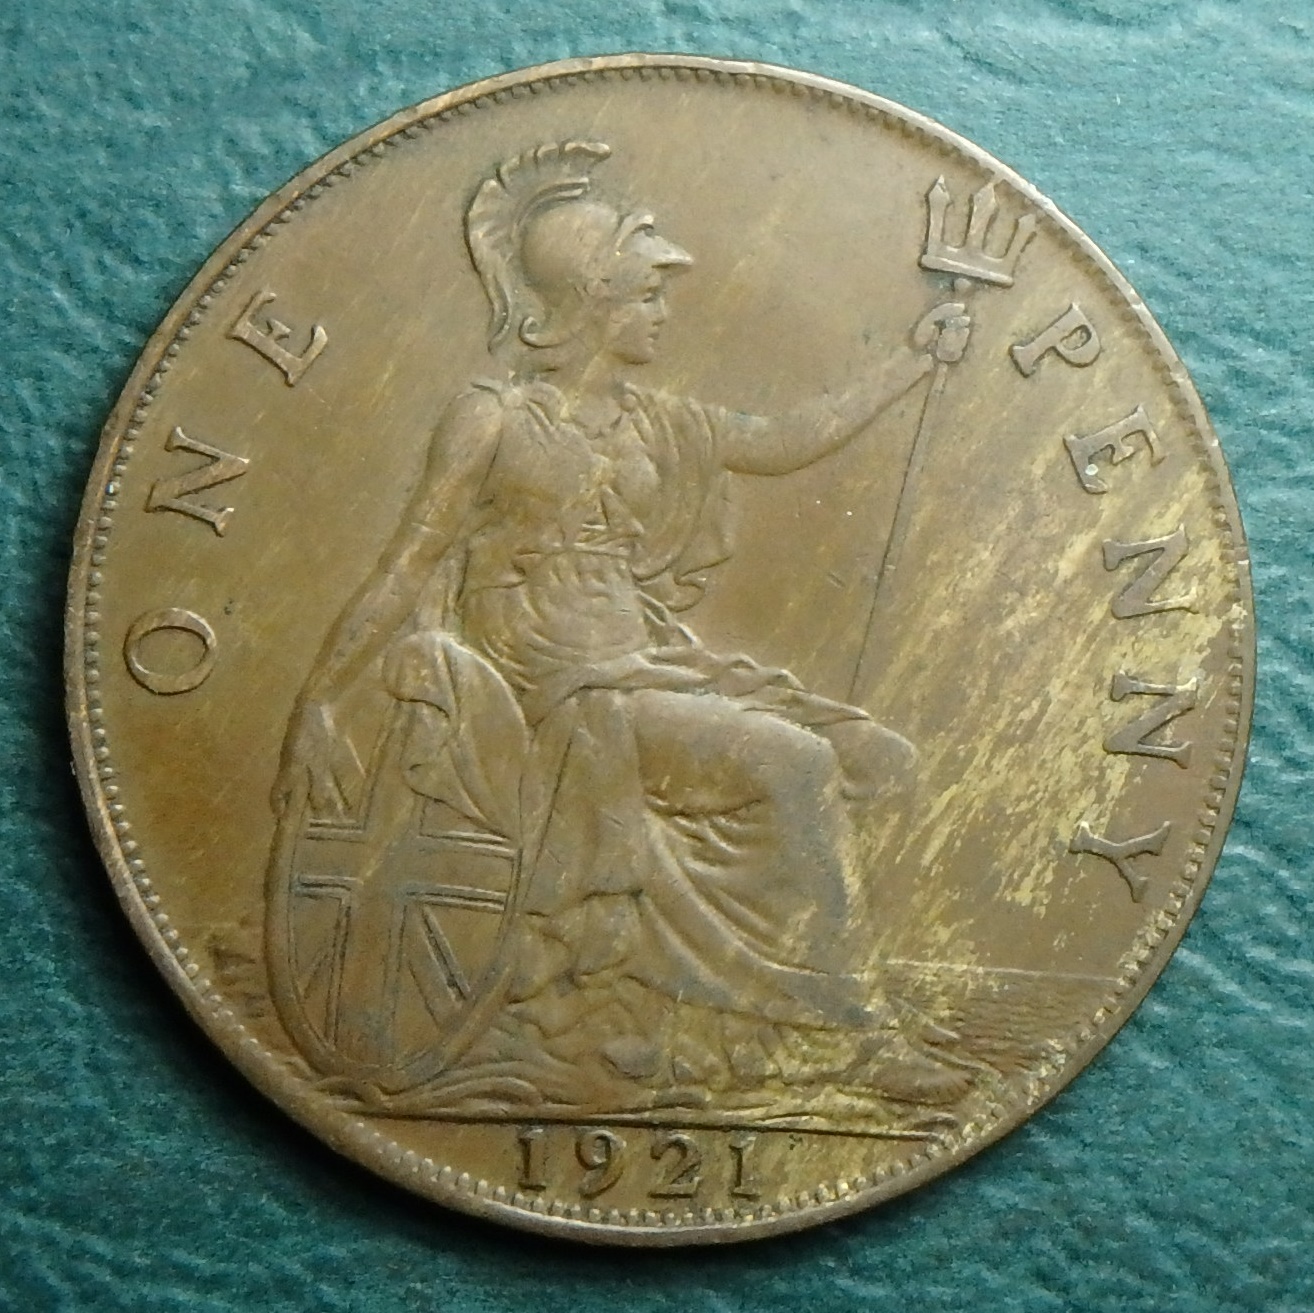 1921 GB 1 p rev.JPG